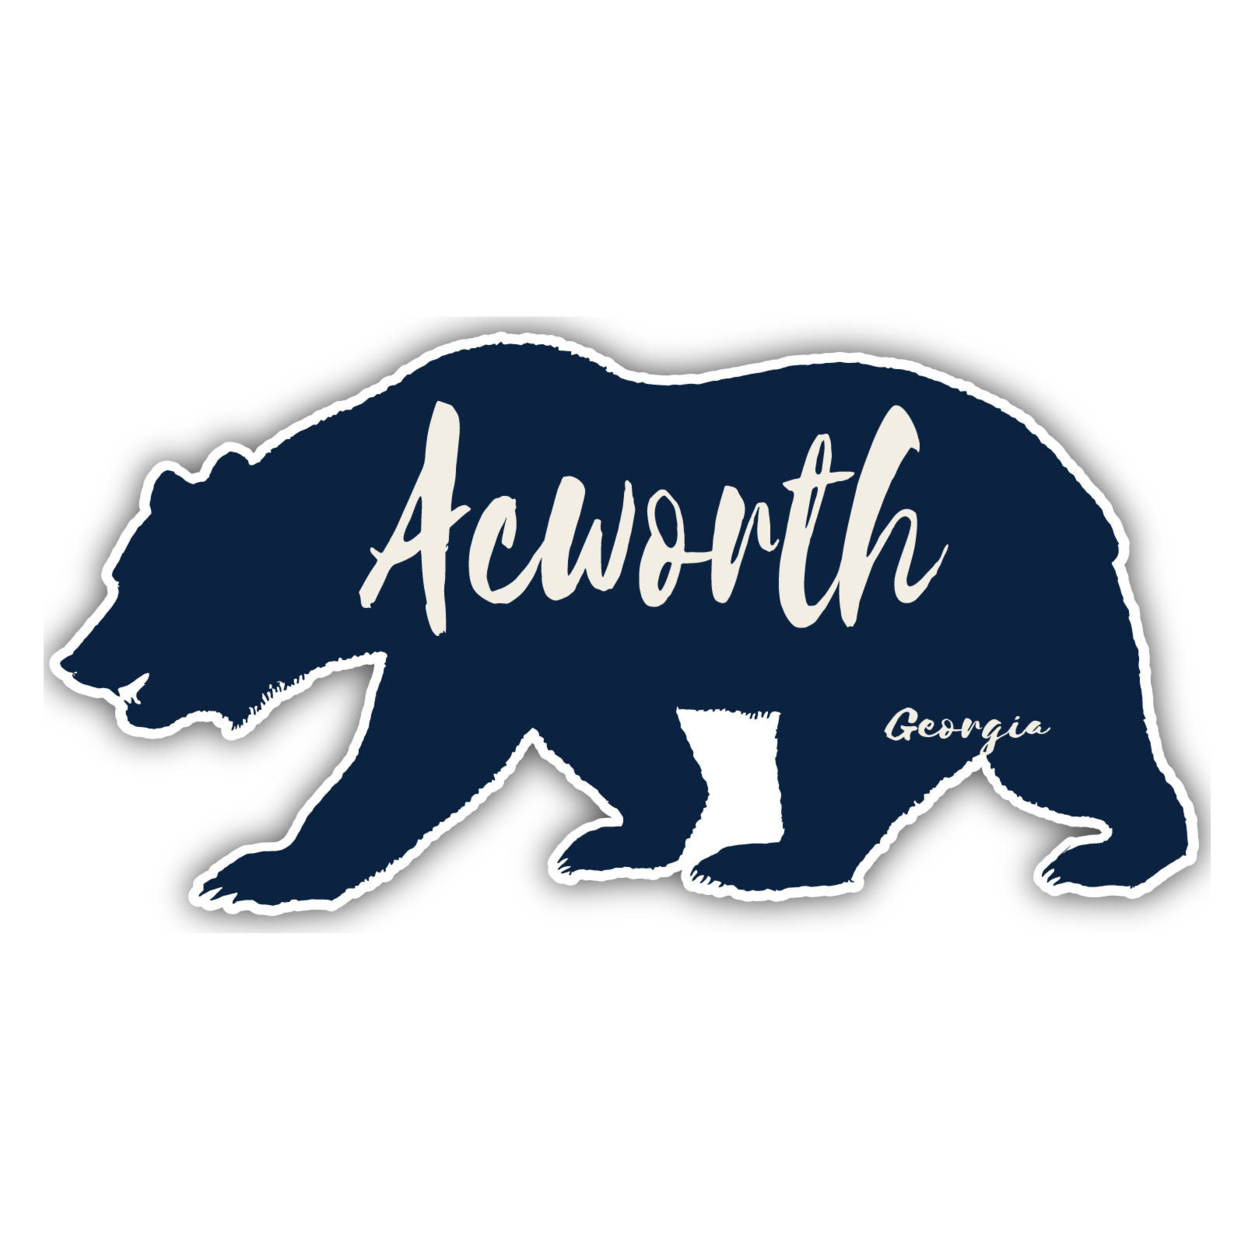 Acworth Georgia Souvenir Decorative Stickers (Choose Theme And Size) - Single Unit, 4-Inch, Bear